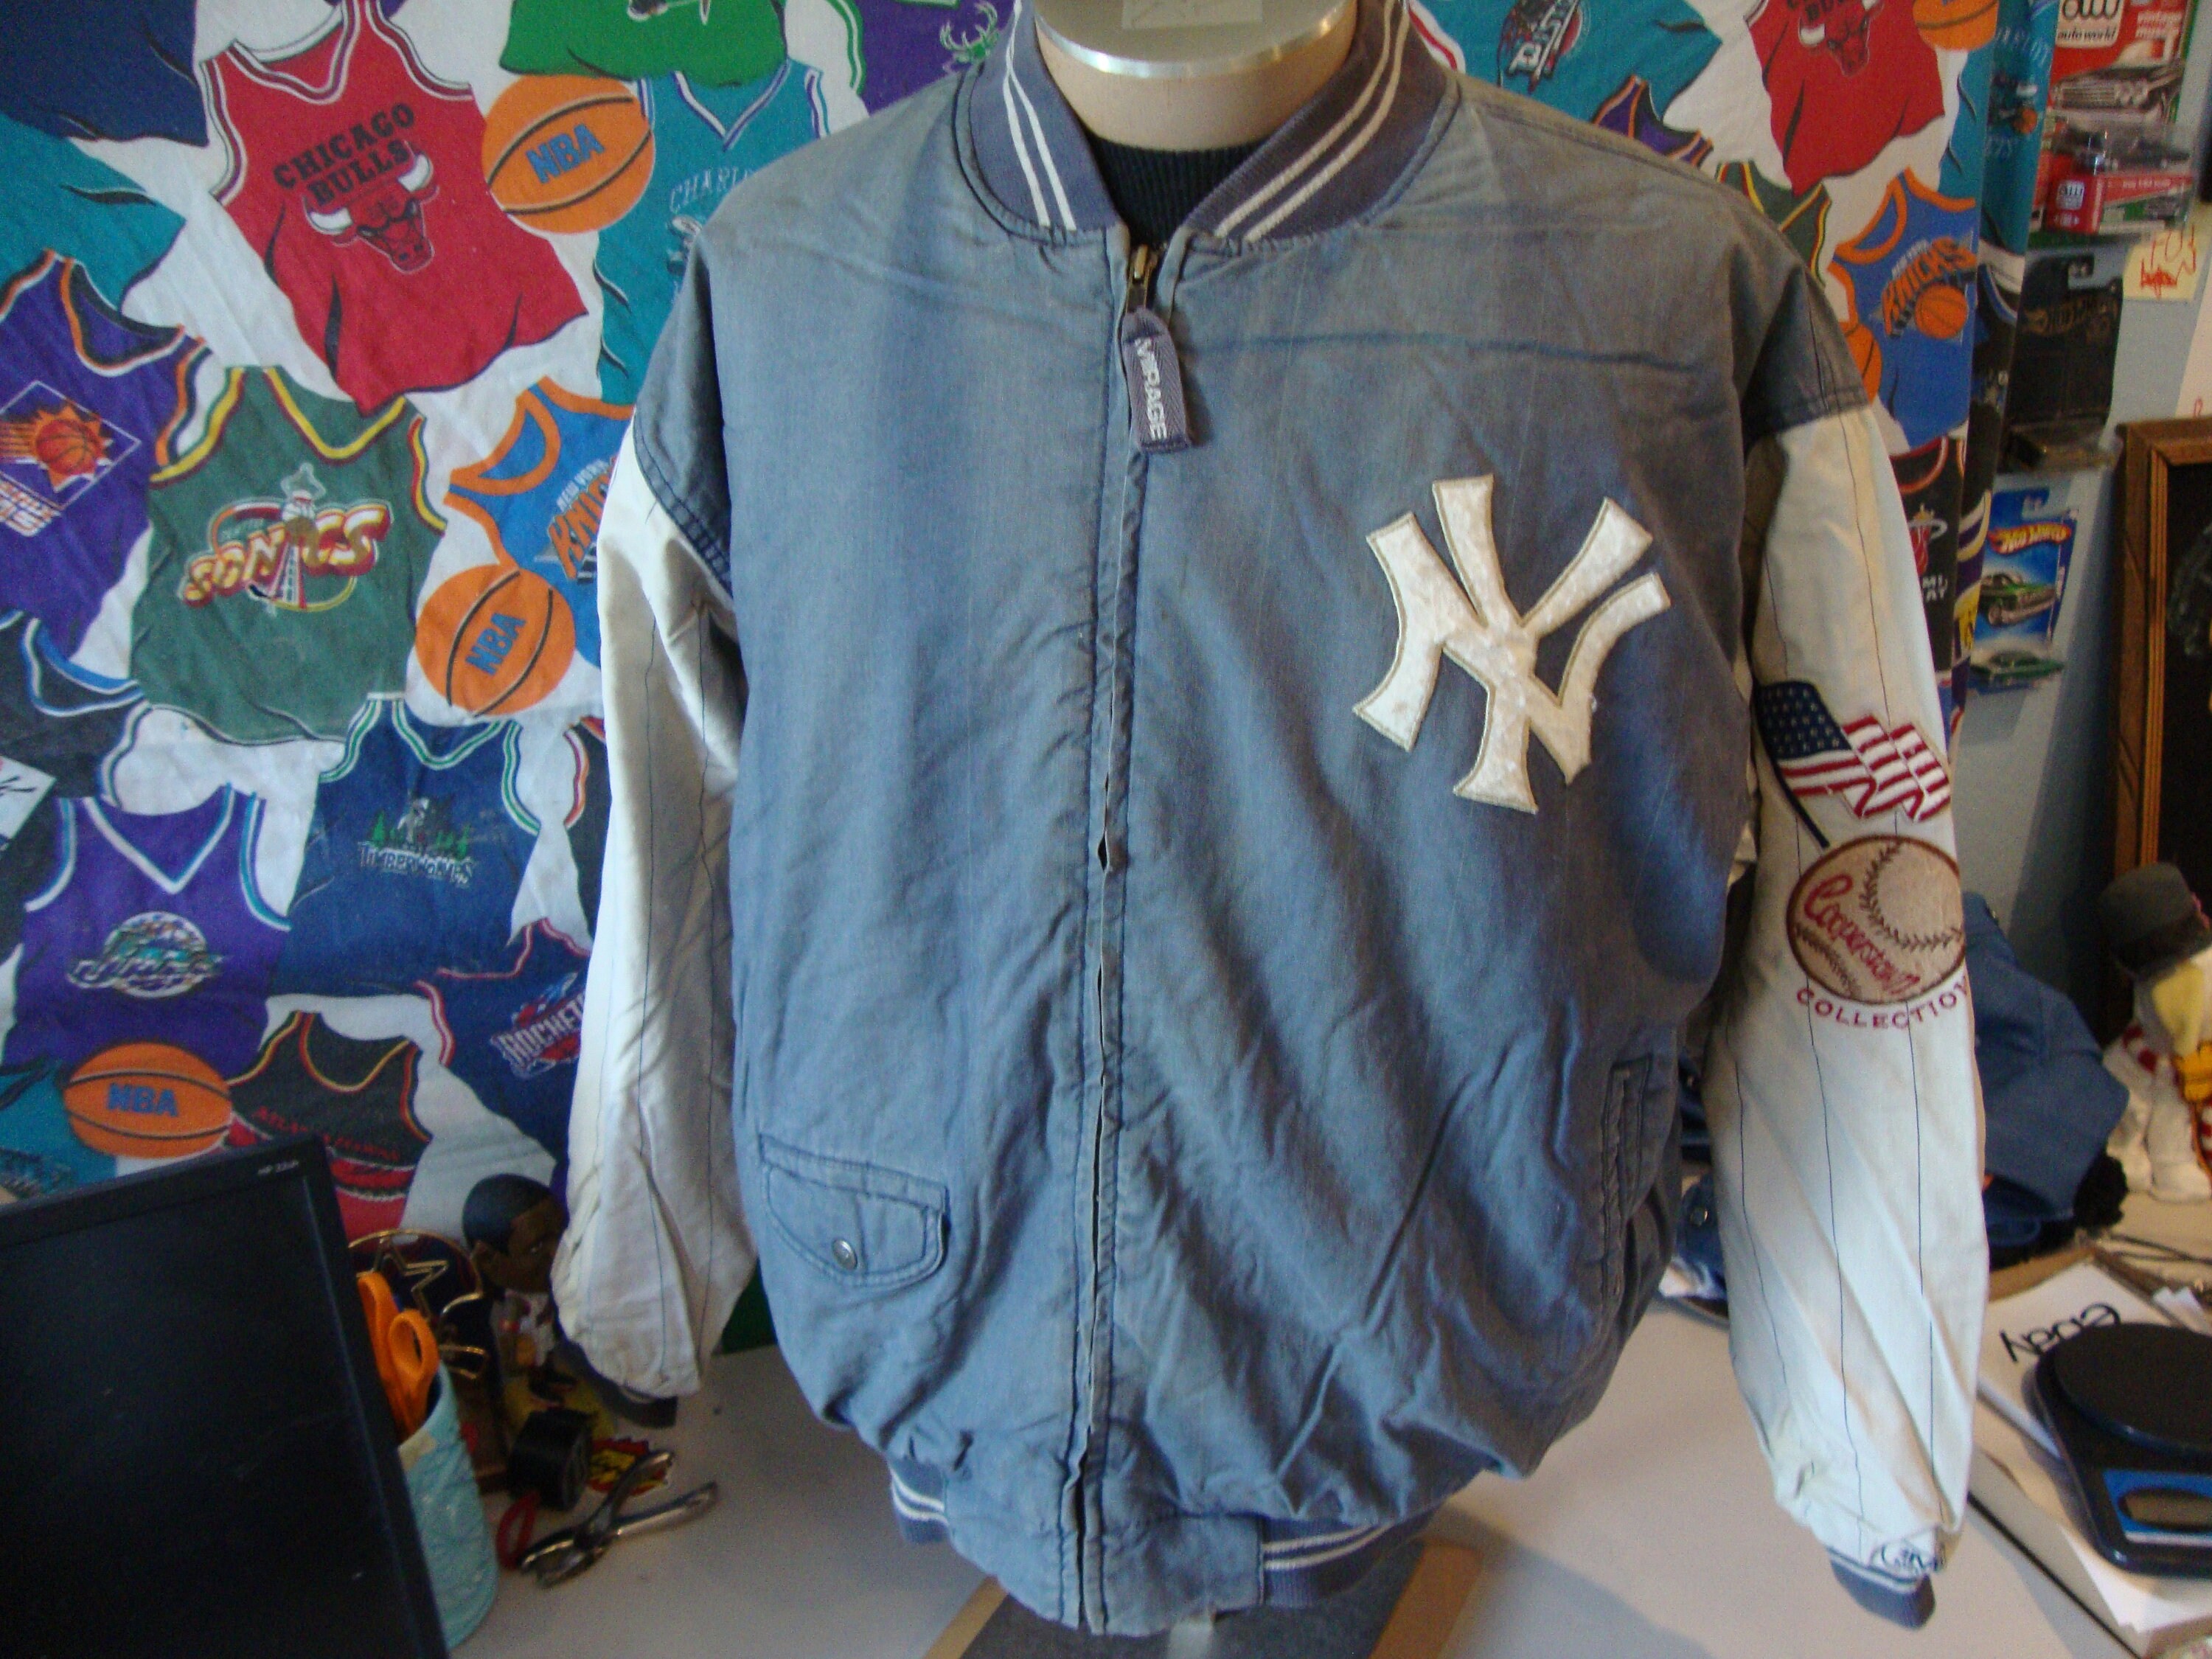 Florida Marlins MLB BASEBALL VINTAGE MIRAGE 1990s Size Medium Jersey Shirt!